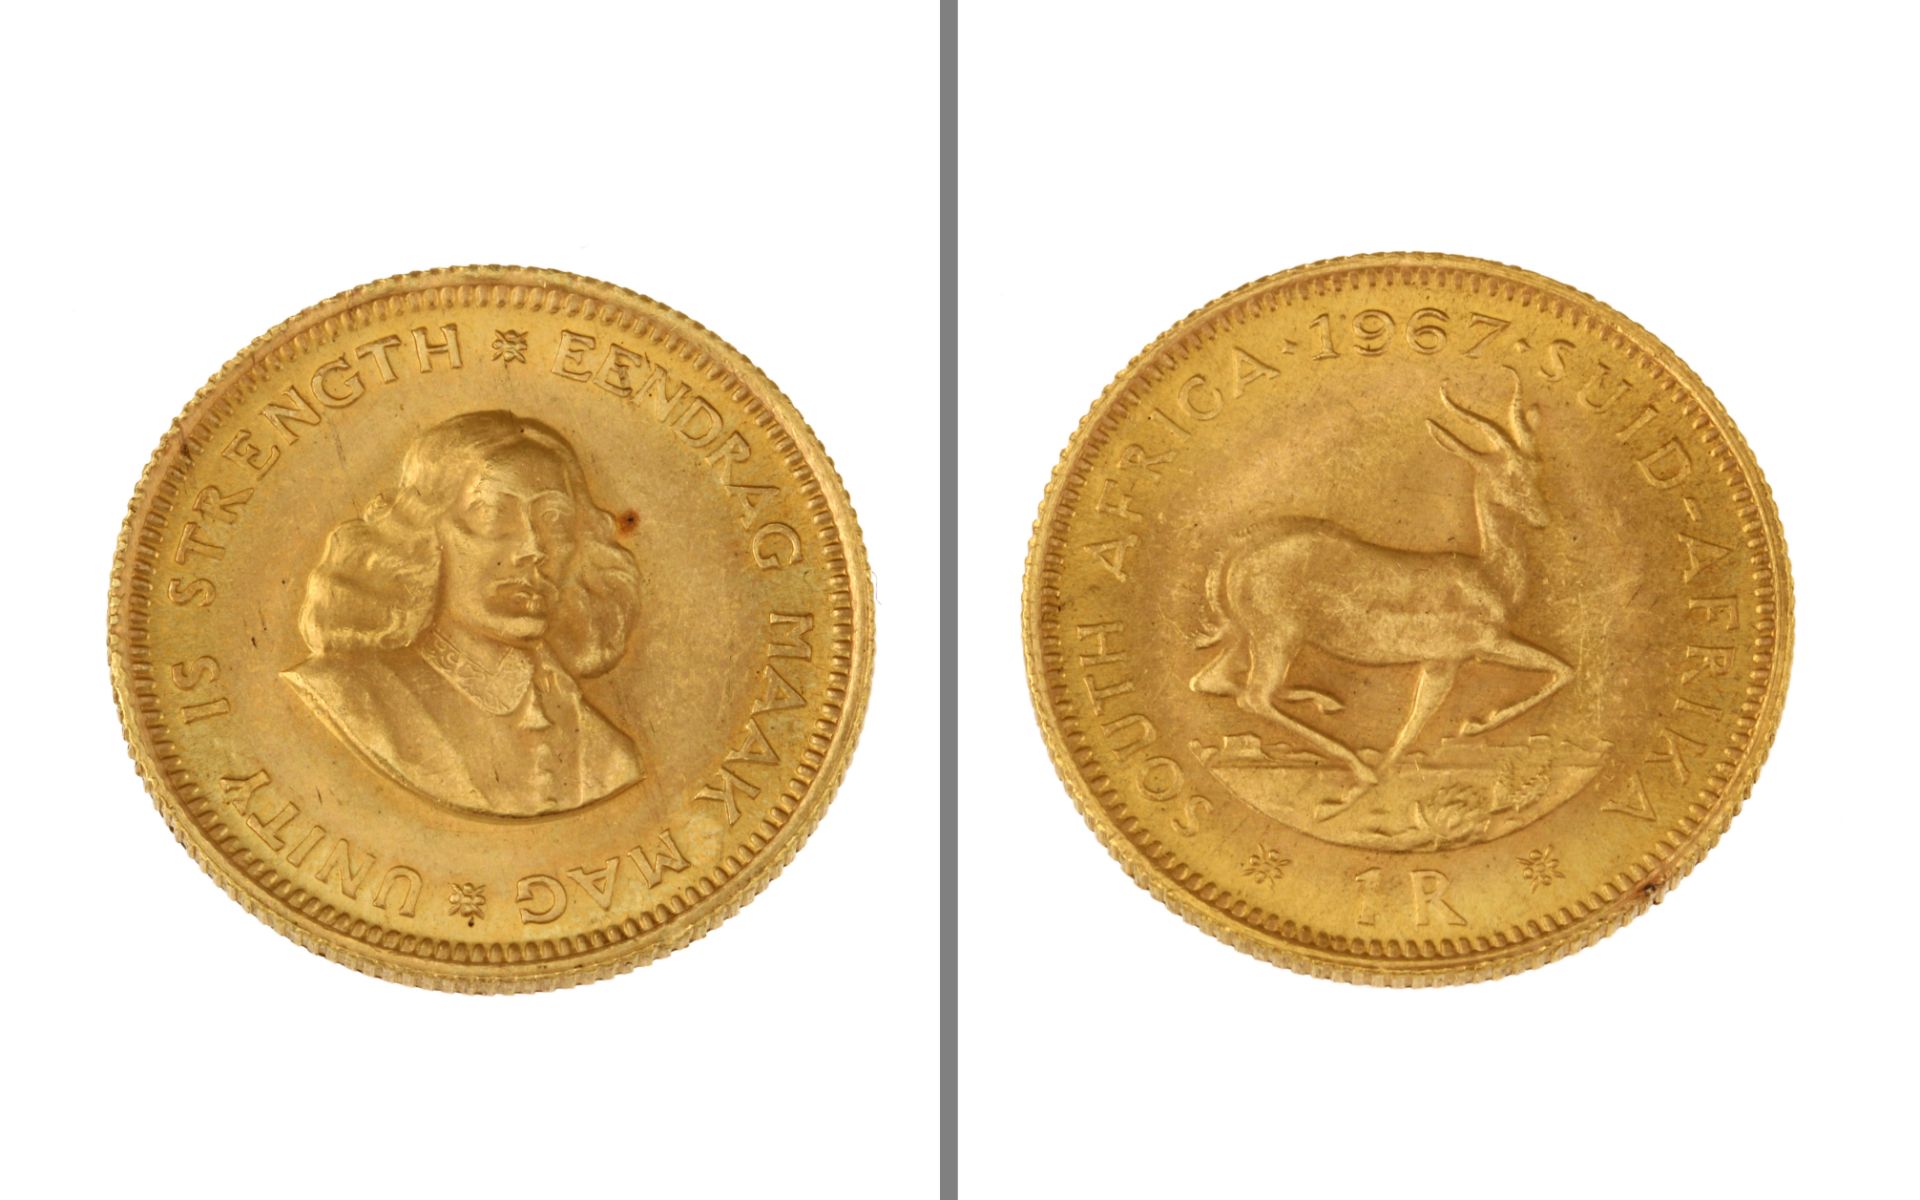 Goldmuenze 1 Rand South Africa 4.05g 917/- Gelbgold 1967